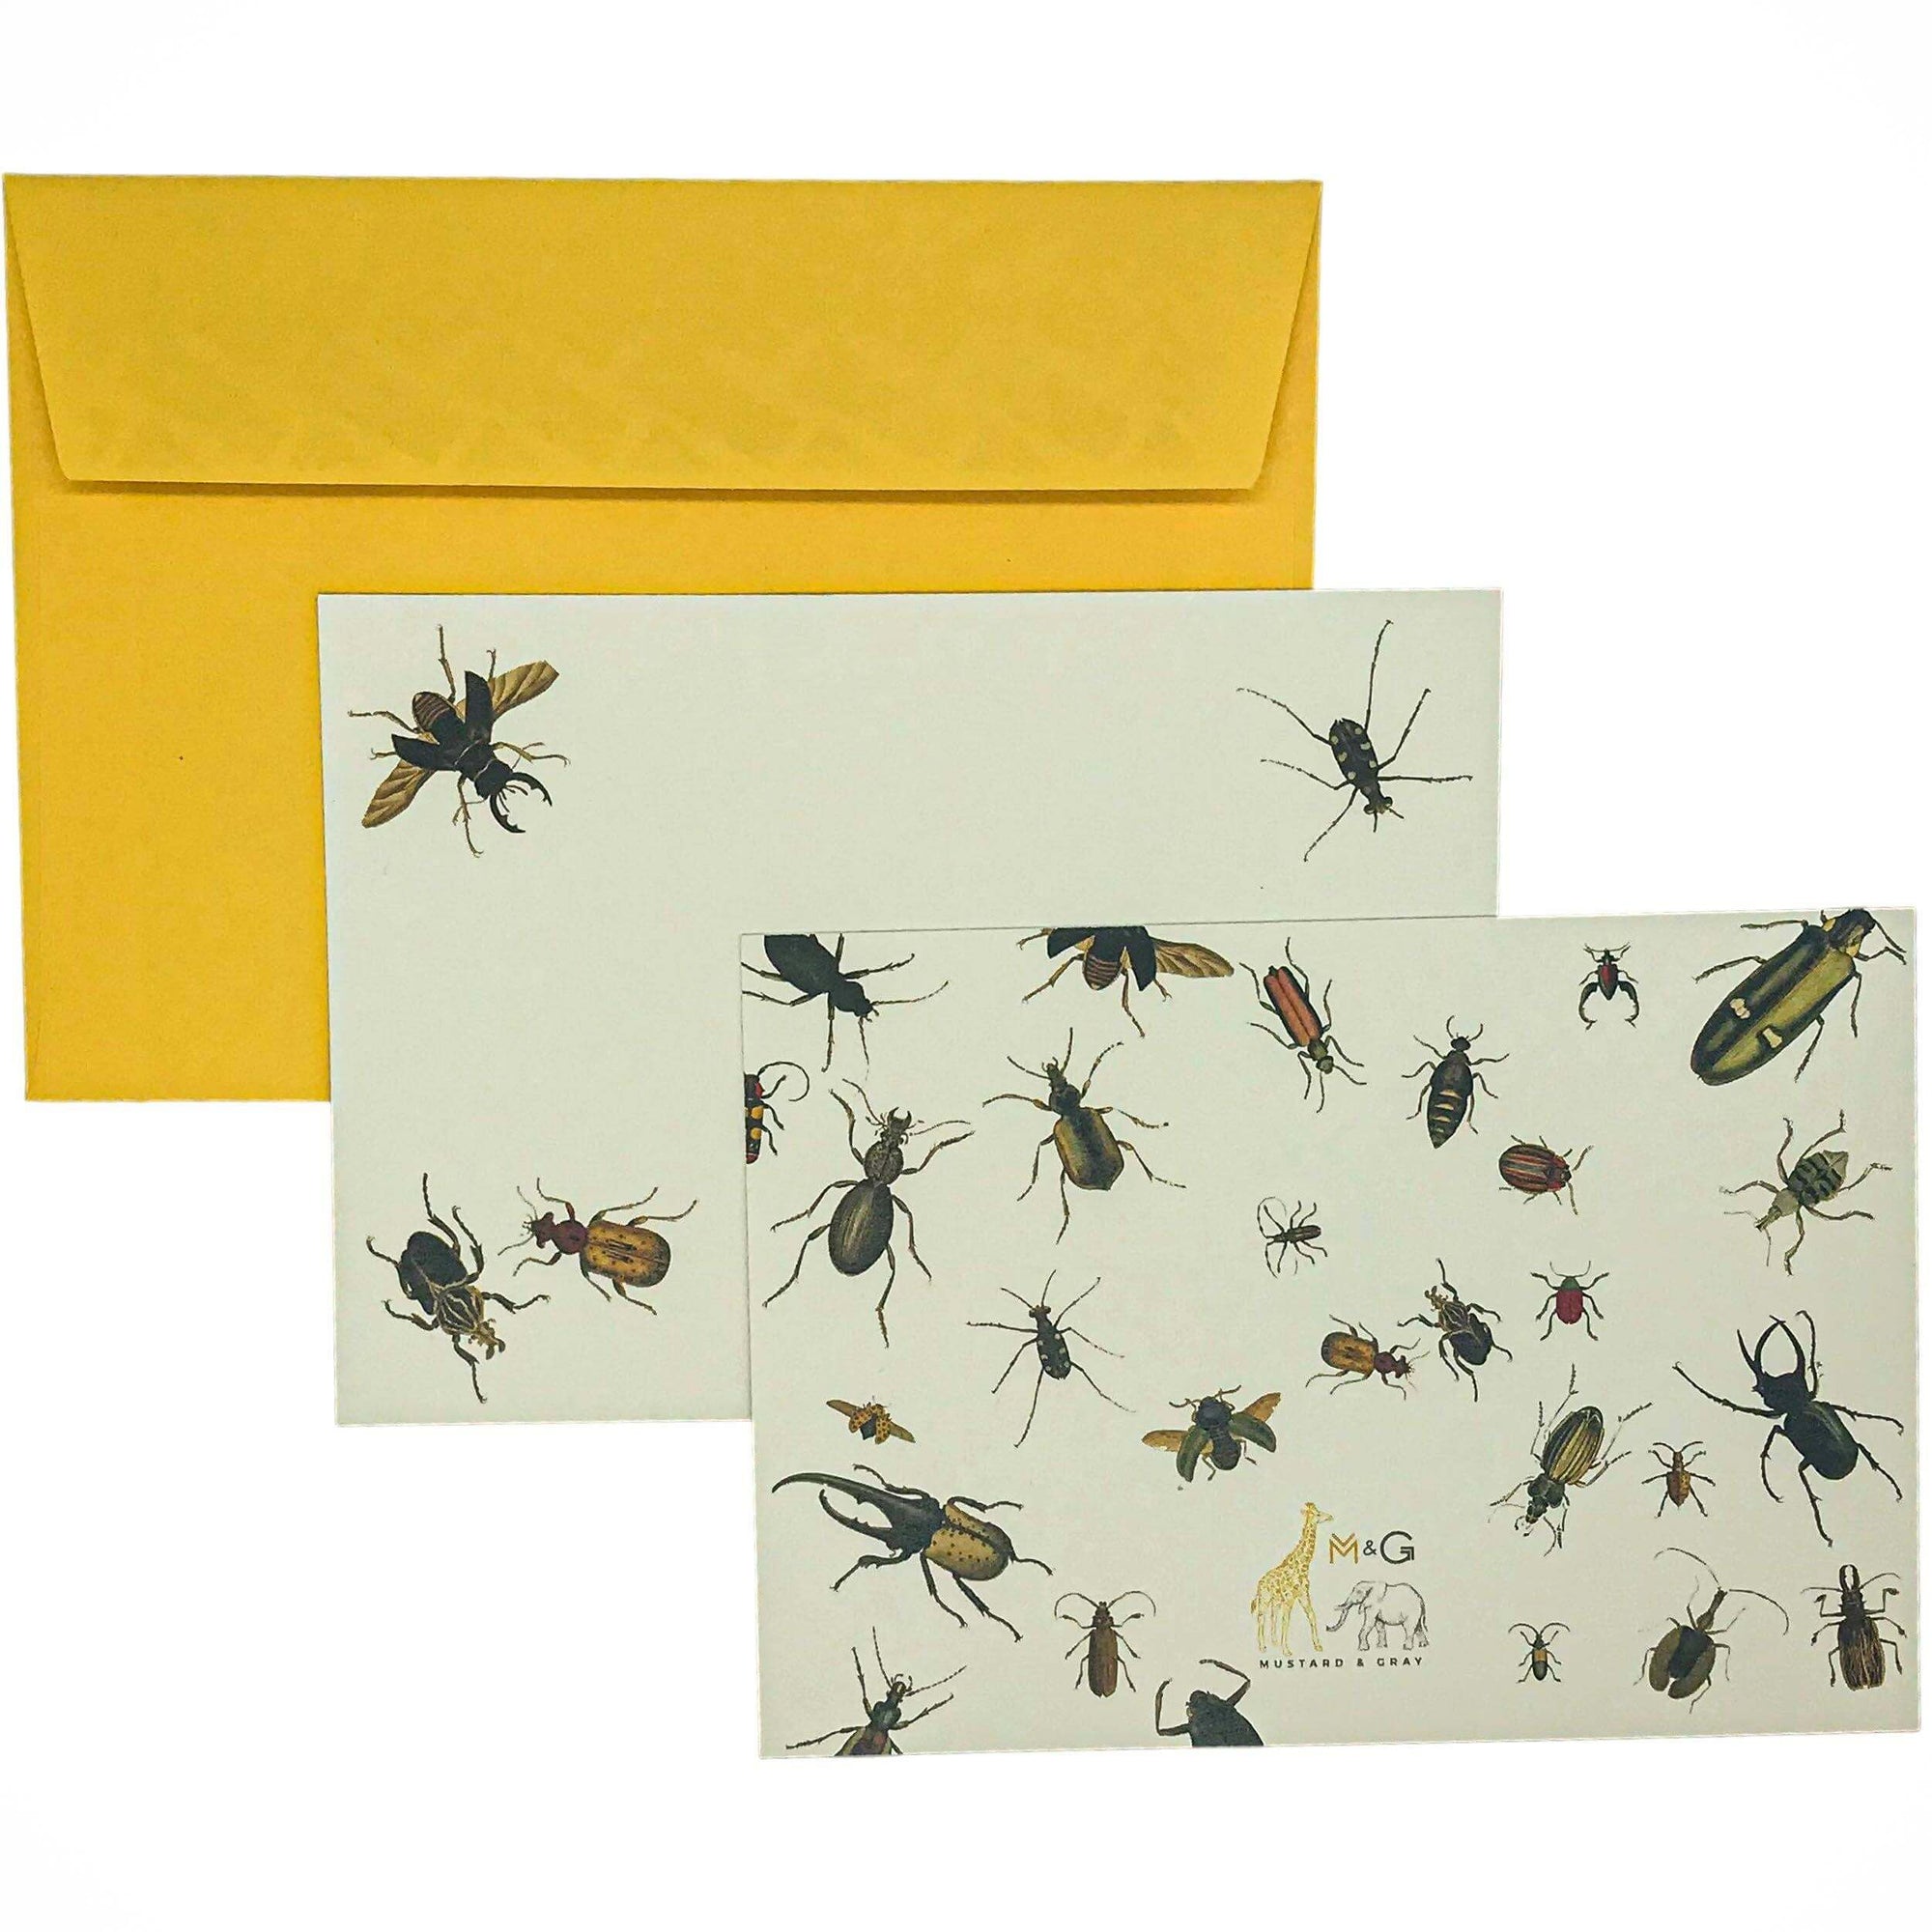 Vintage Bugs Notecard Set Notecards with Plain Envelopes Mustard and Gray Ltd Shropshire UK